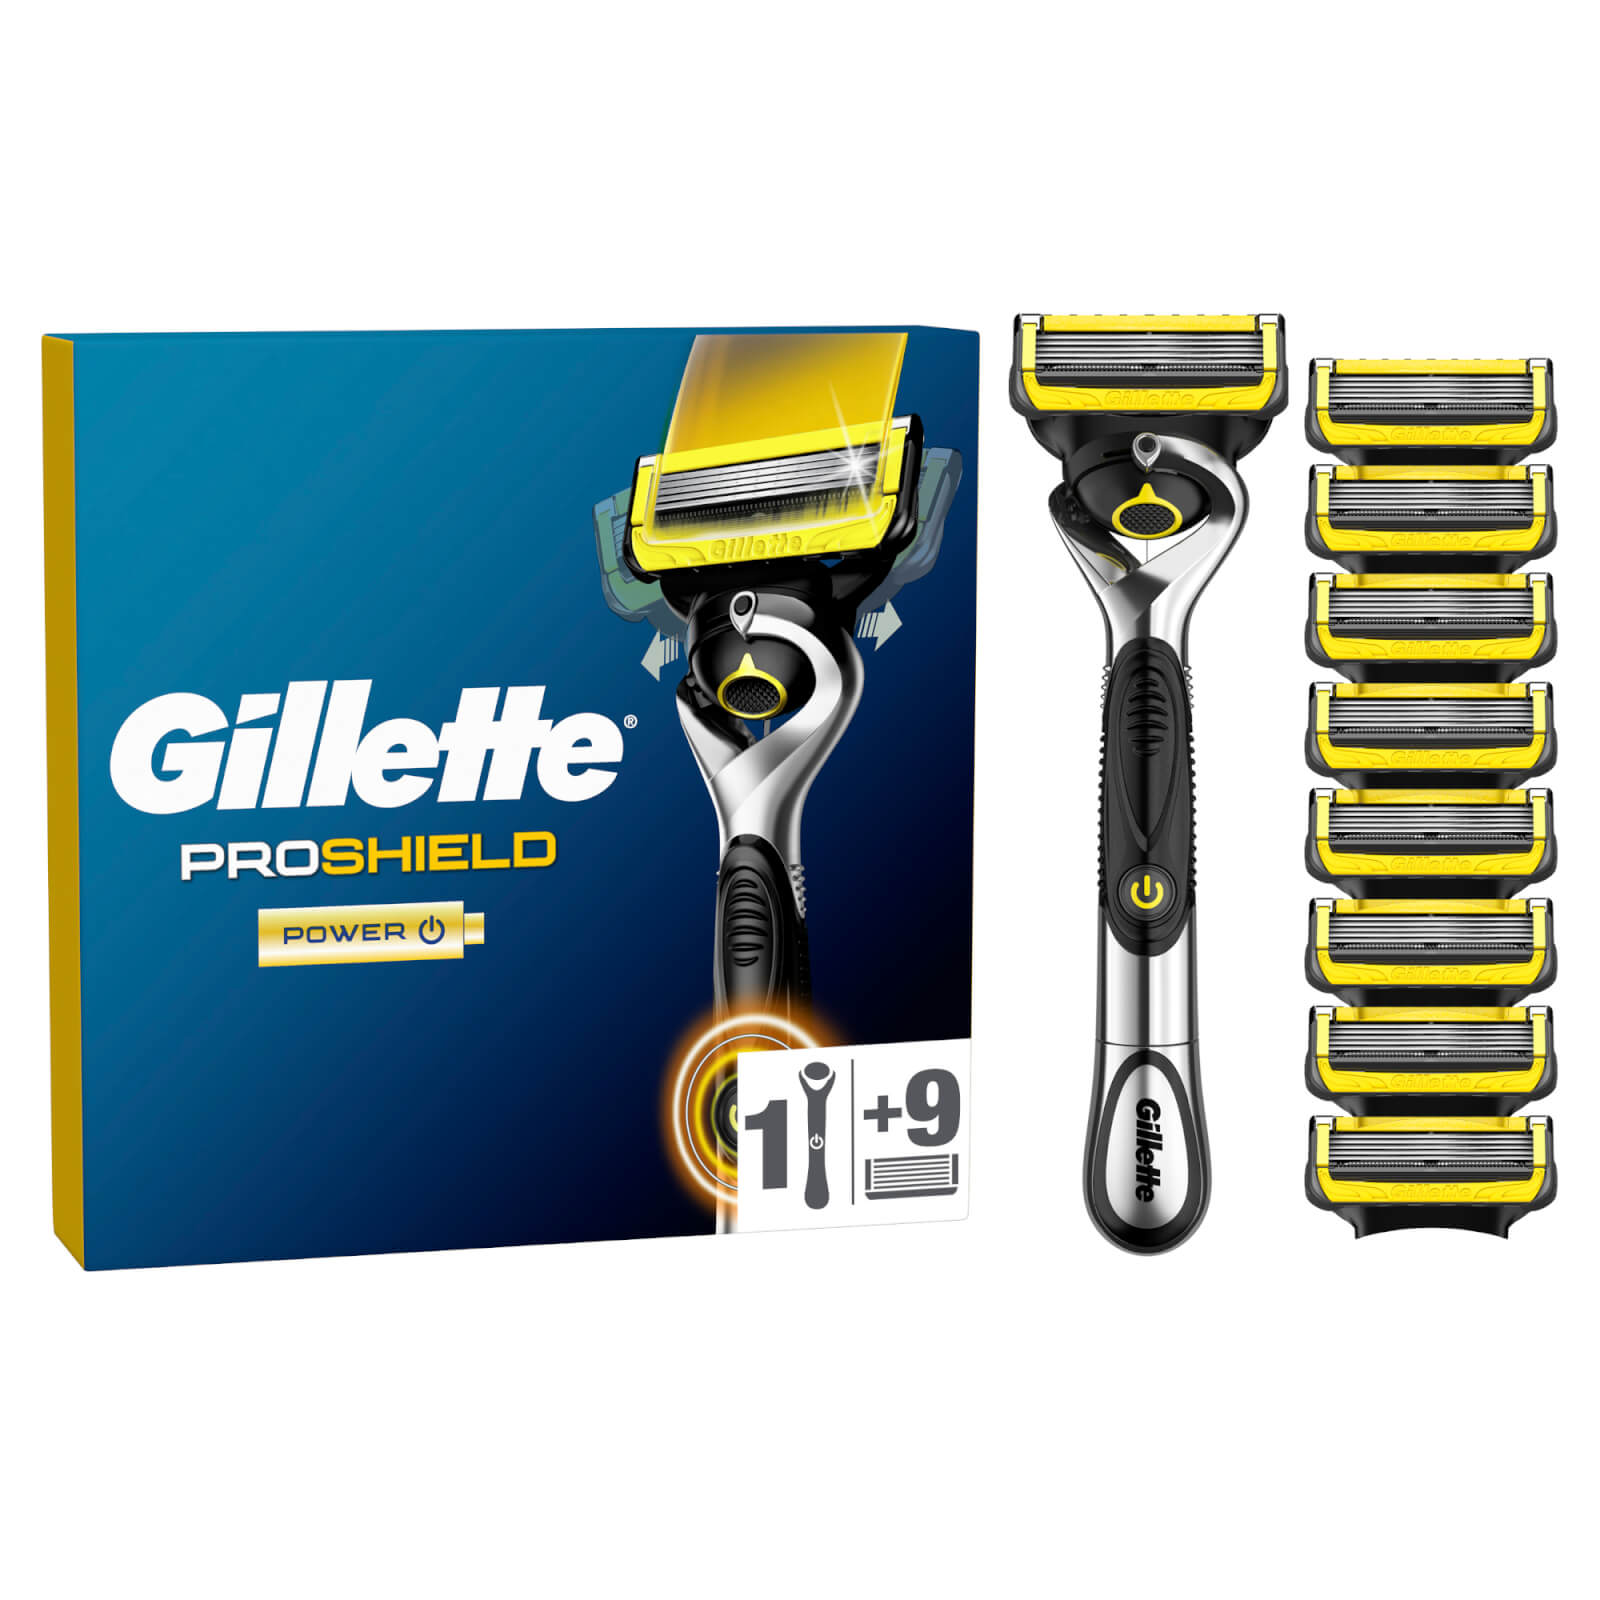 Gillette ProShield Power Value Pack - Handle + 9 Razor Blades